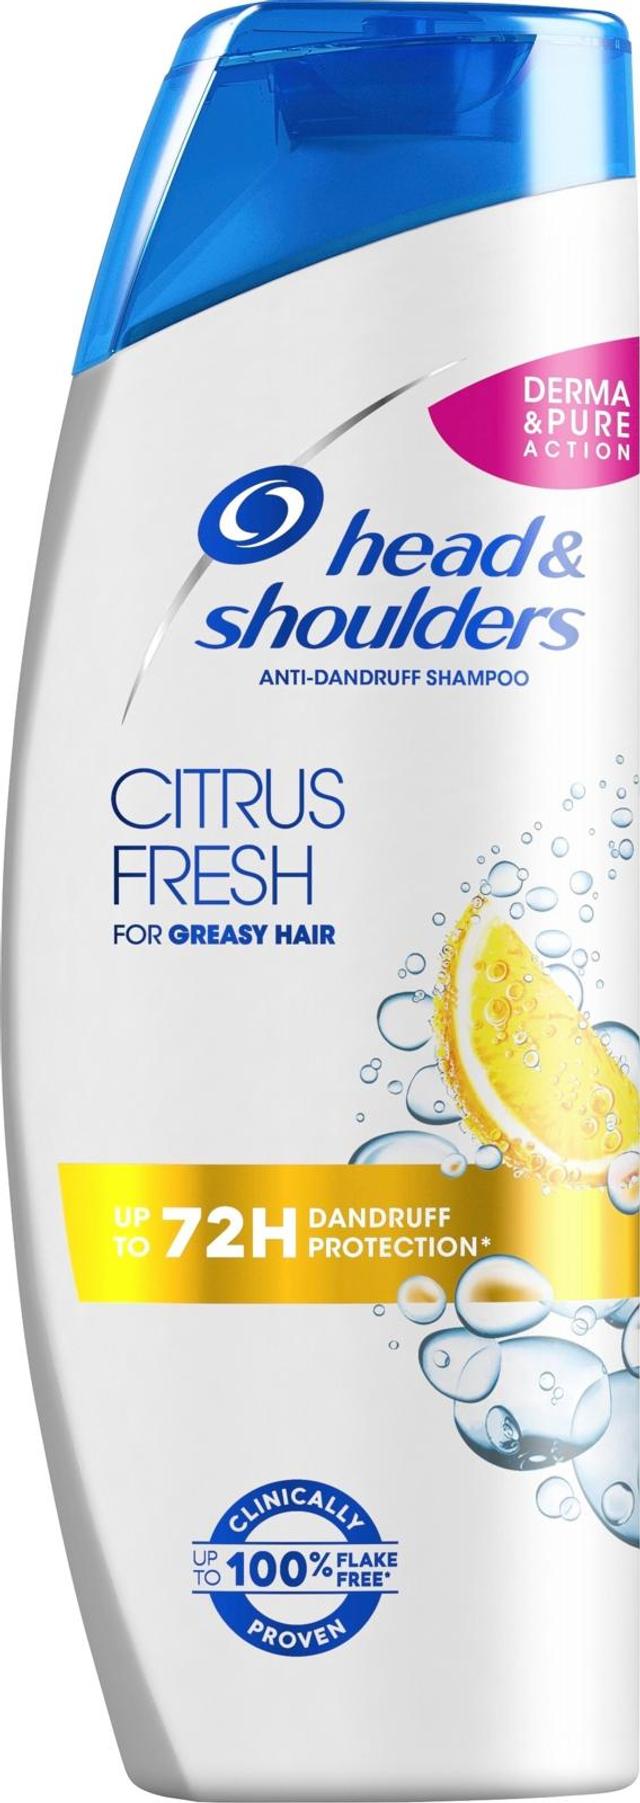 head&shoulders 500ml Citrus Fresh shampoo